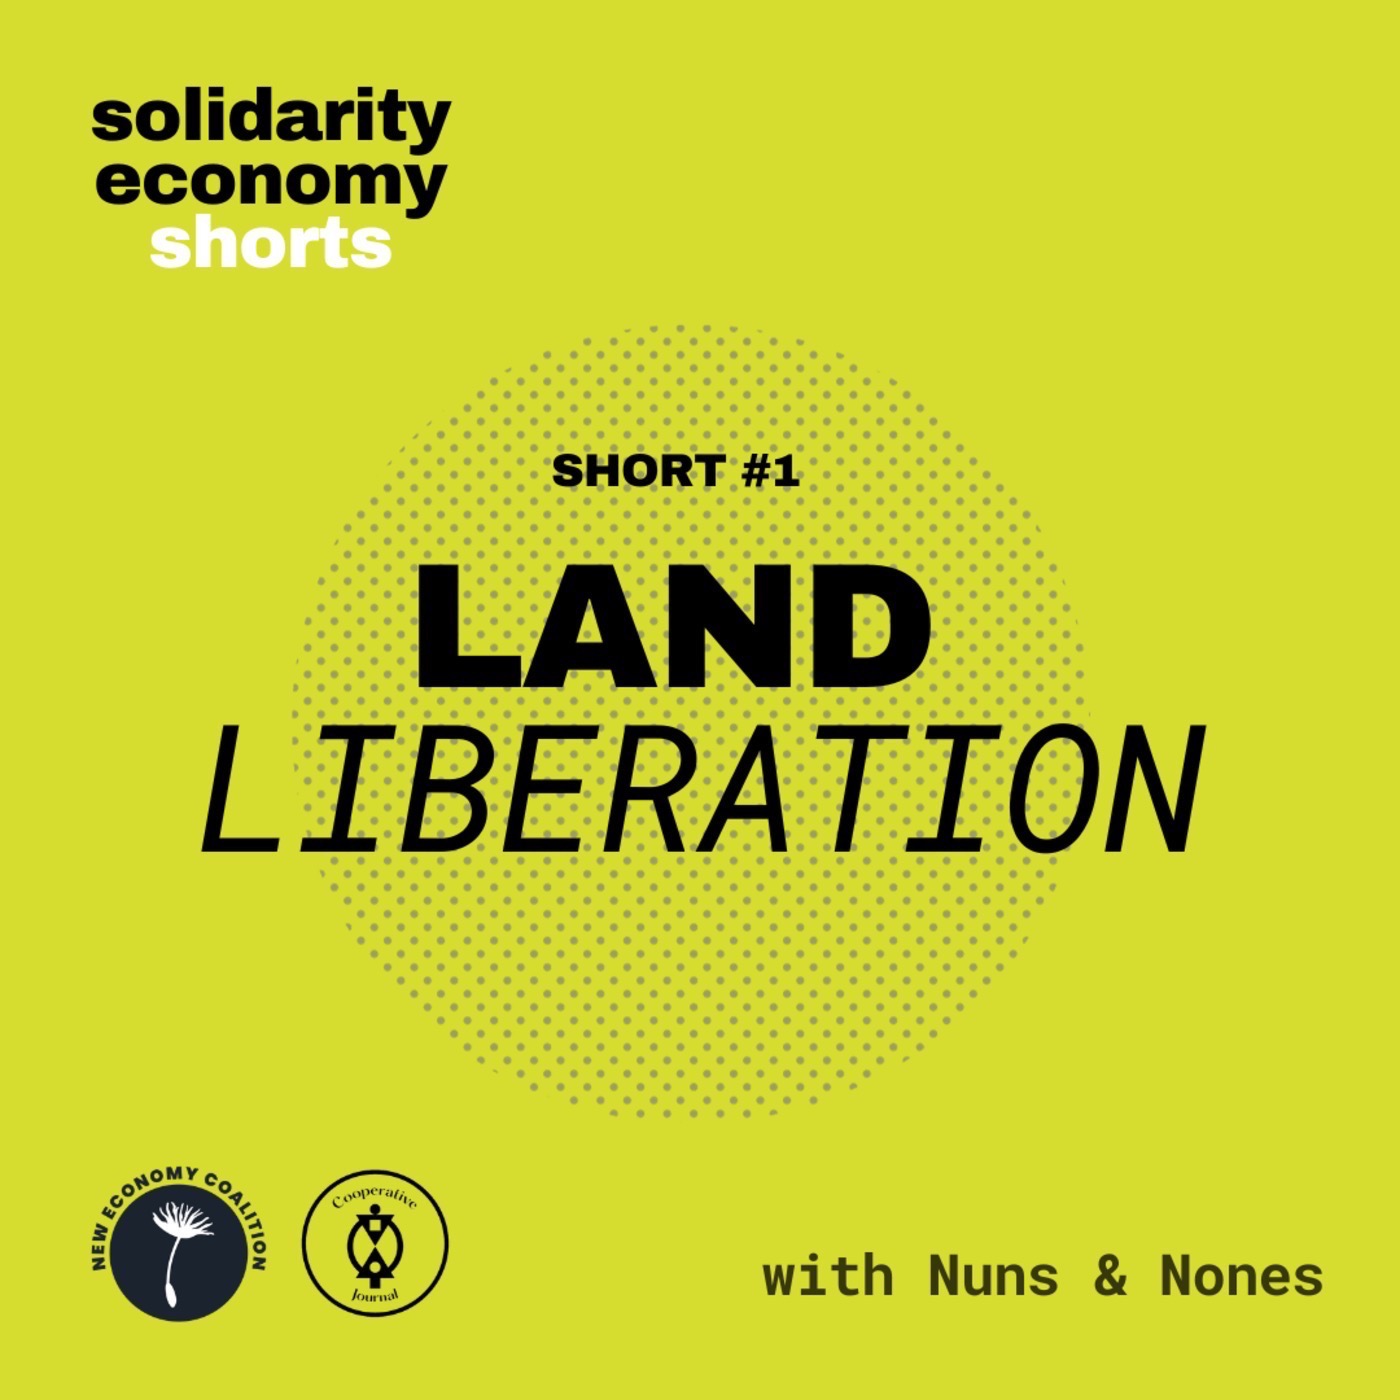 Solidarity Economy Shorts #1: Land Liberation with Nuns & Nones